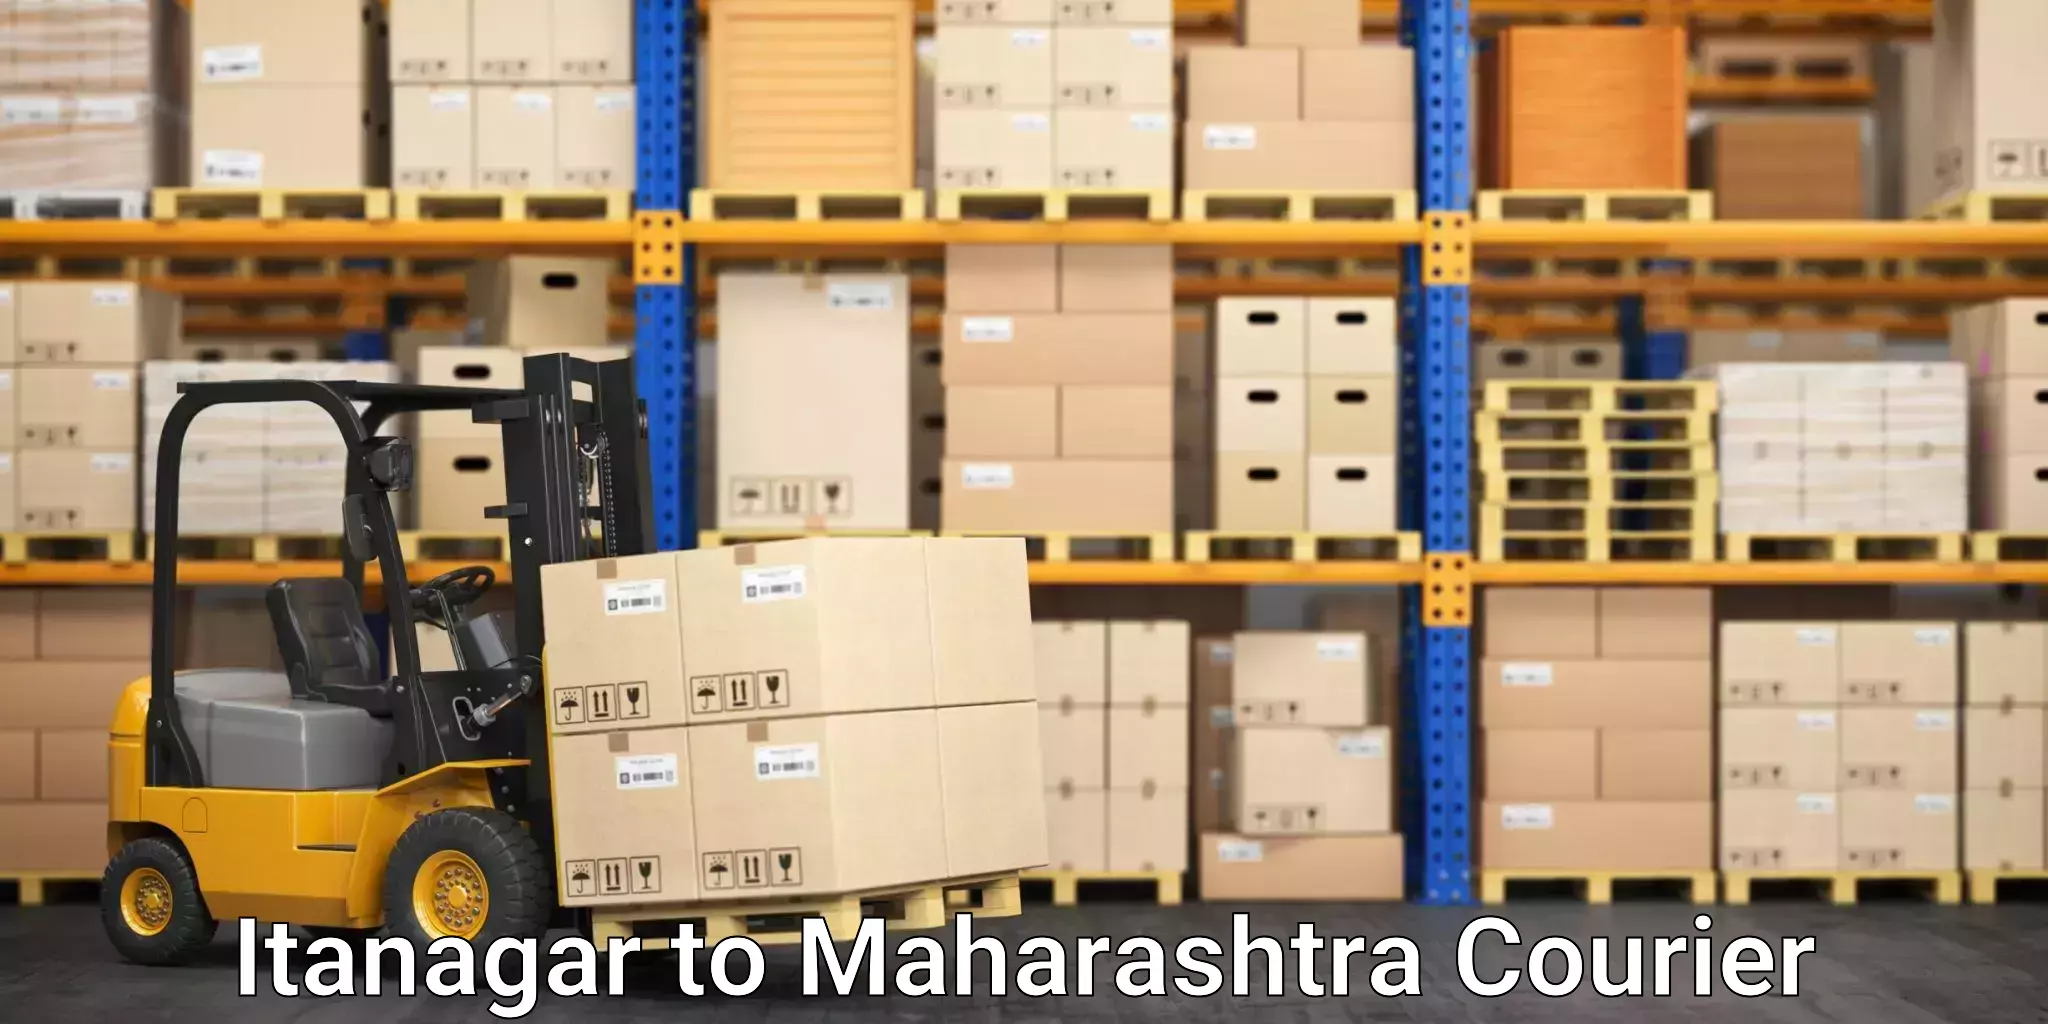 Global shipping networks Itanagar to Maharashtra